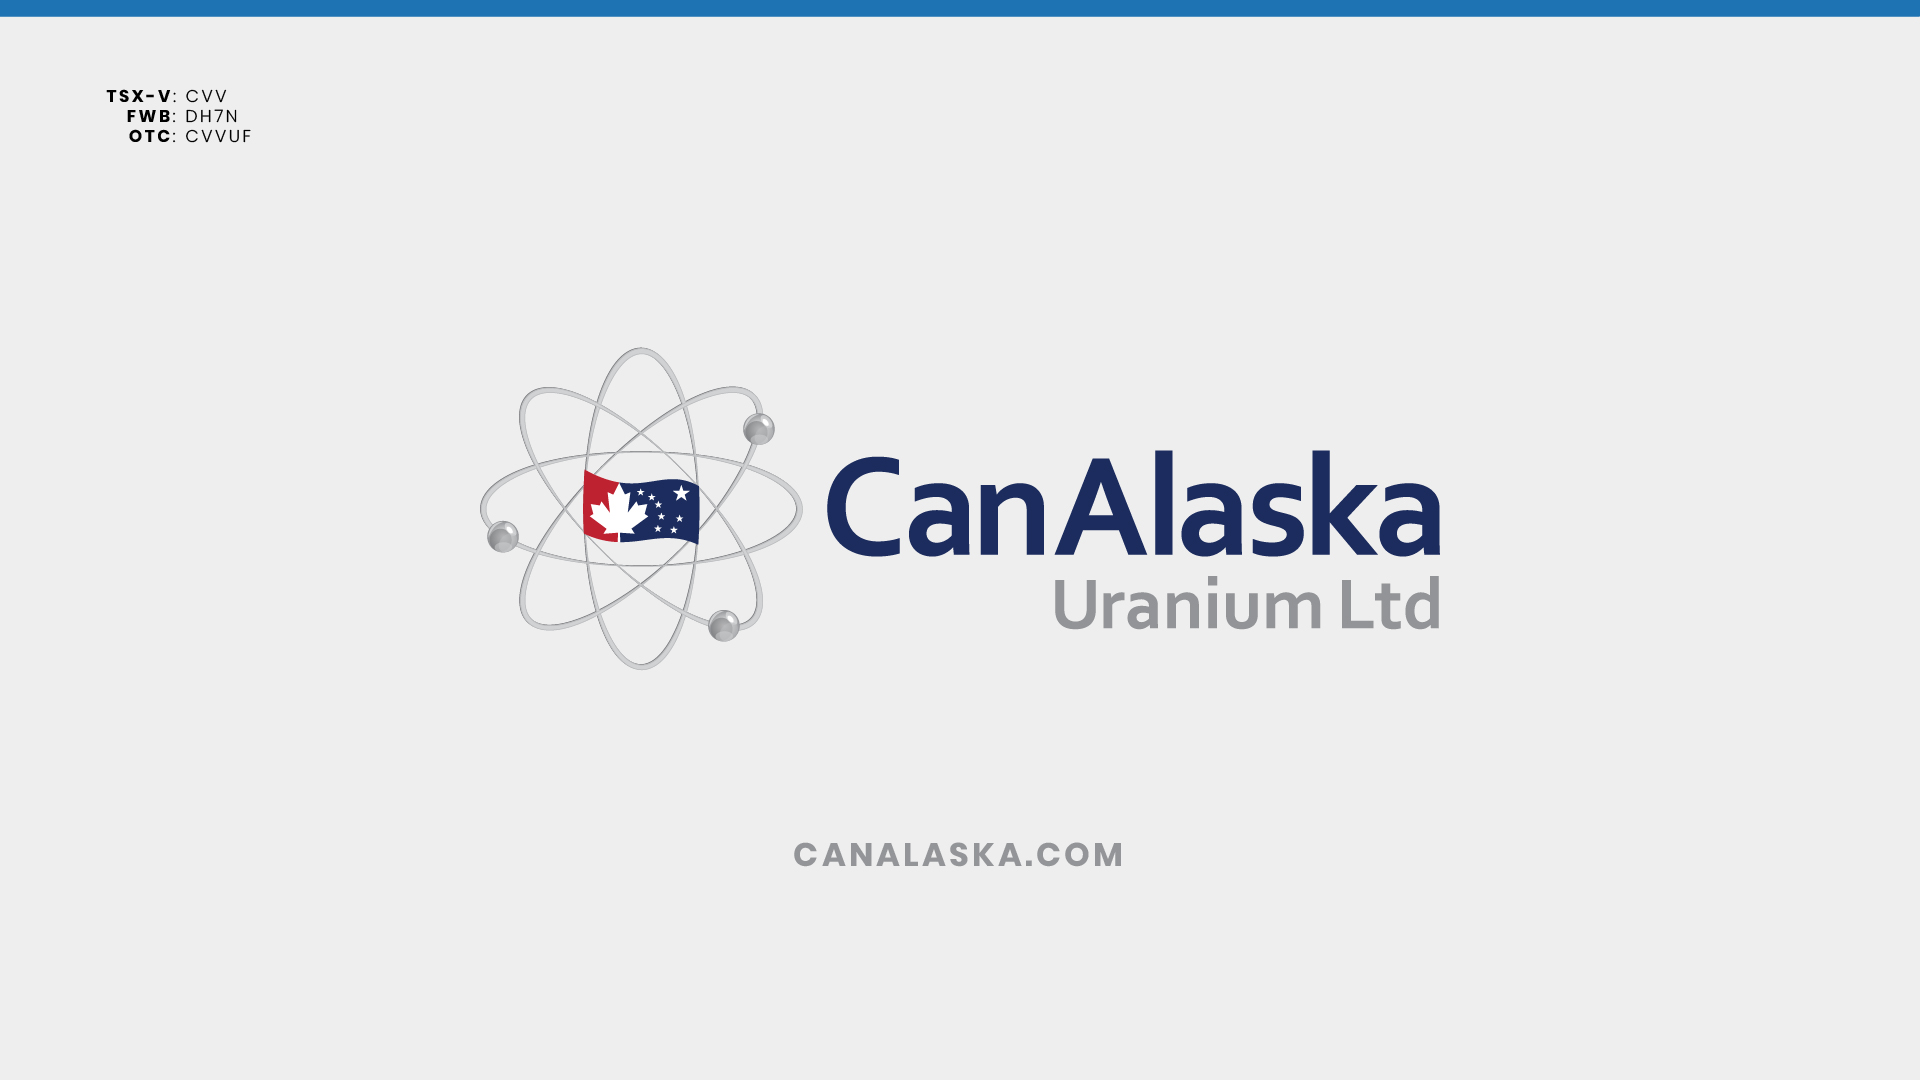 CanAlaska Uranium